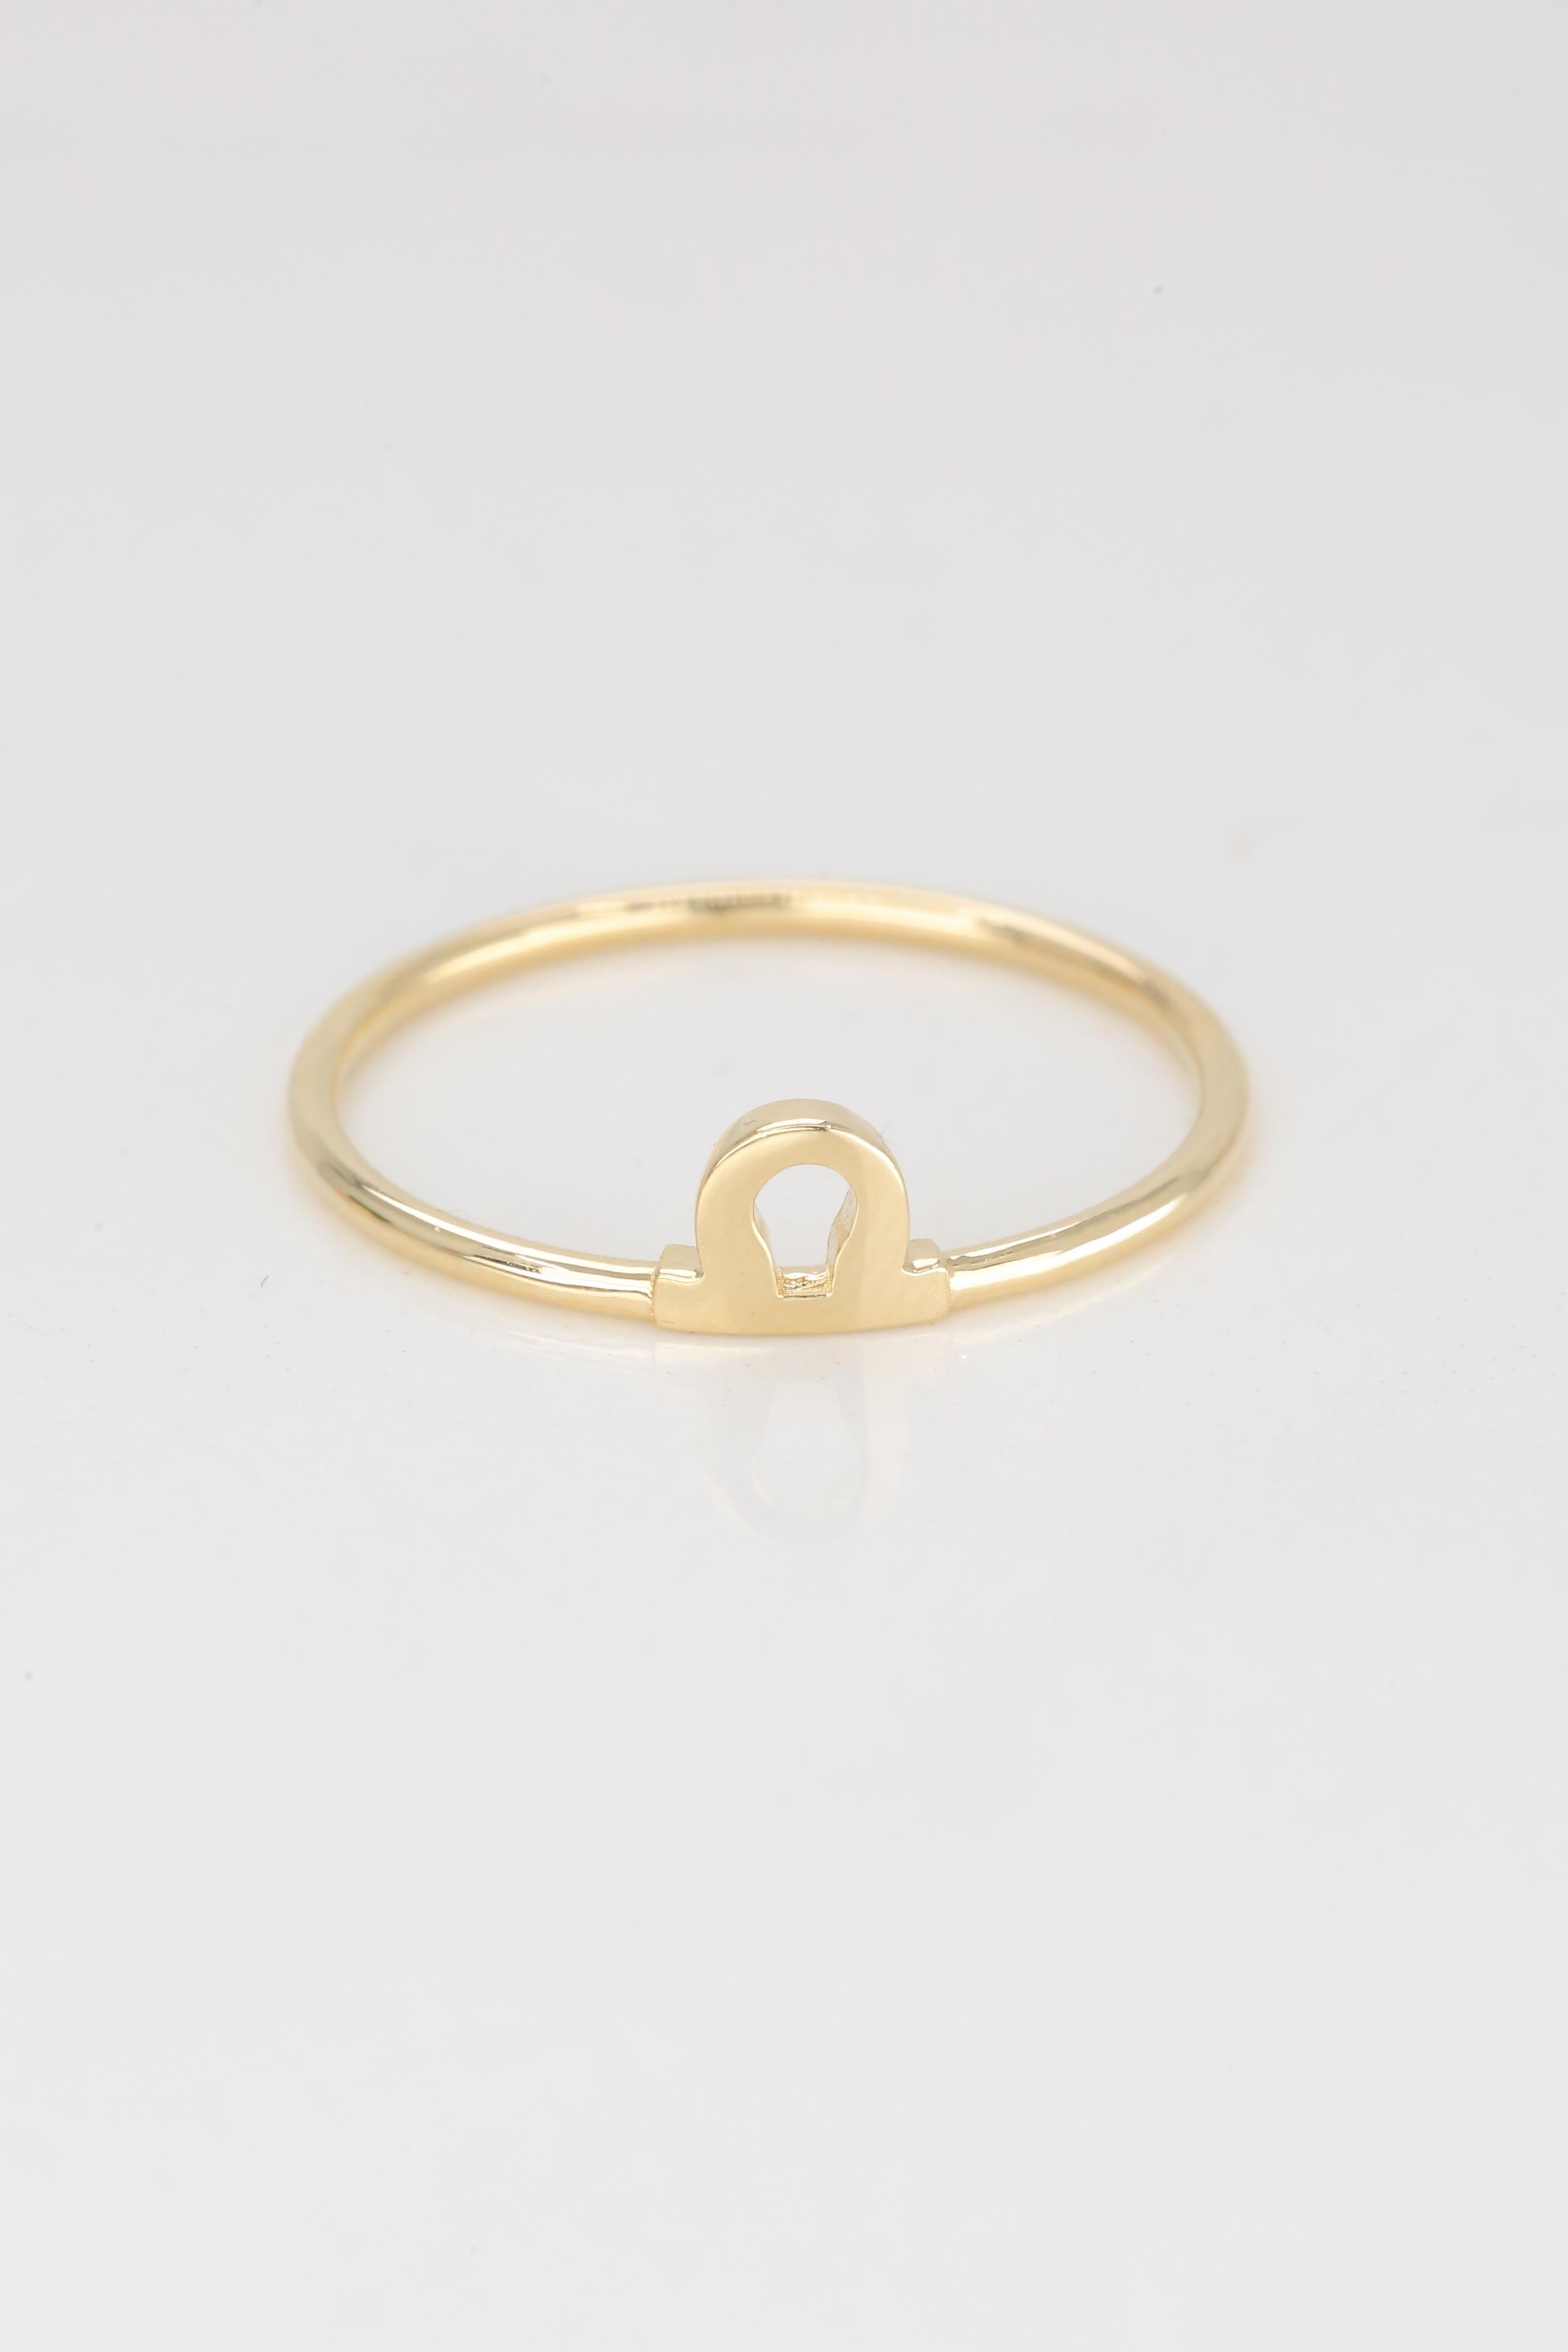 For Sale:  14k Gold Libra Ring, Libra Sign Gold Ring 7